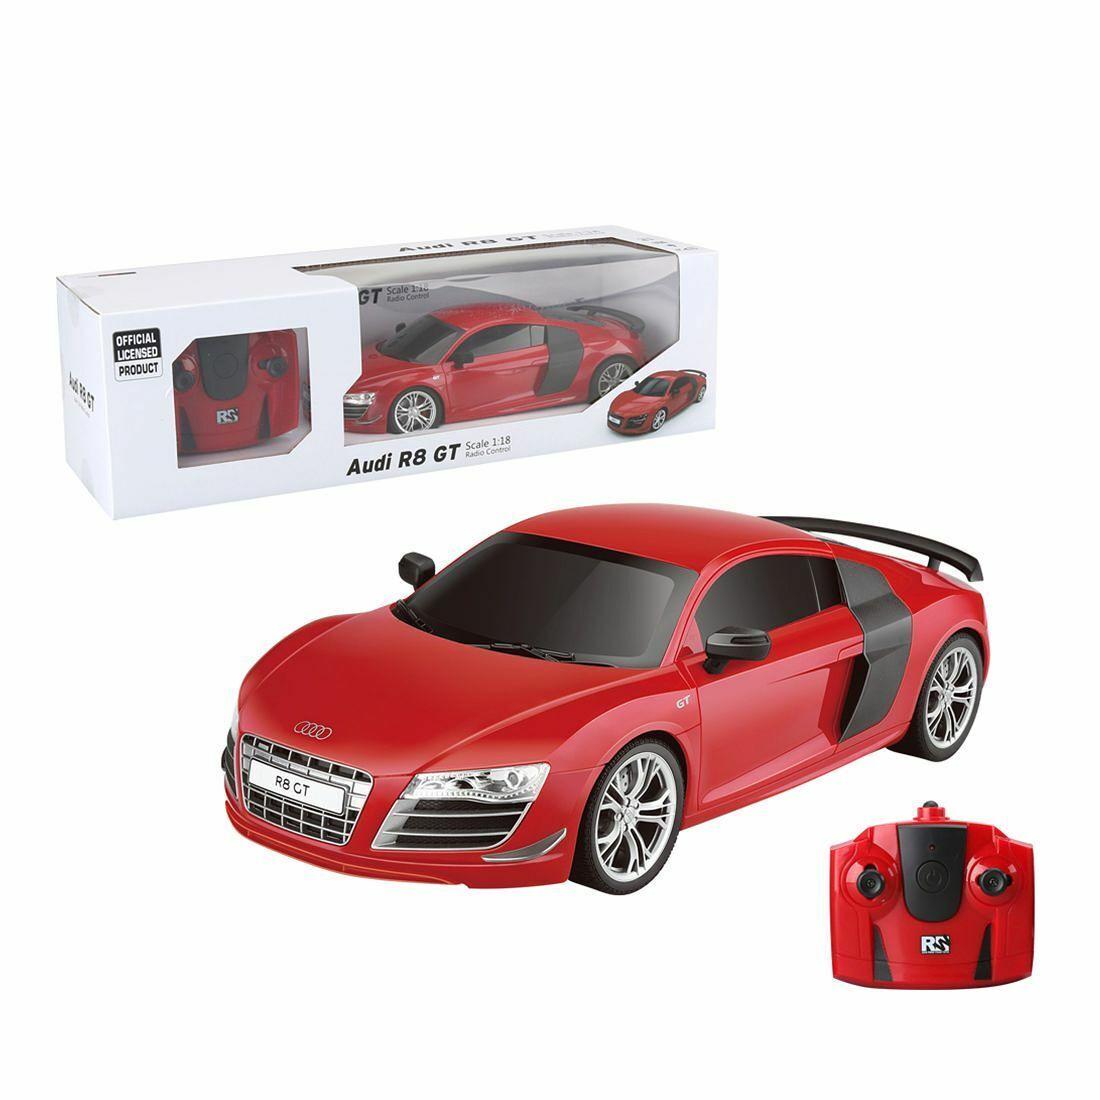 Audi Toy Car Remote Control: High Price, High Quality: The Audi Toy Car Remote Control